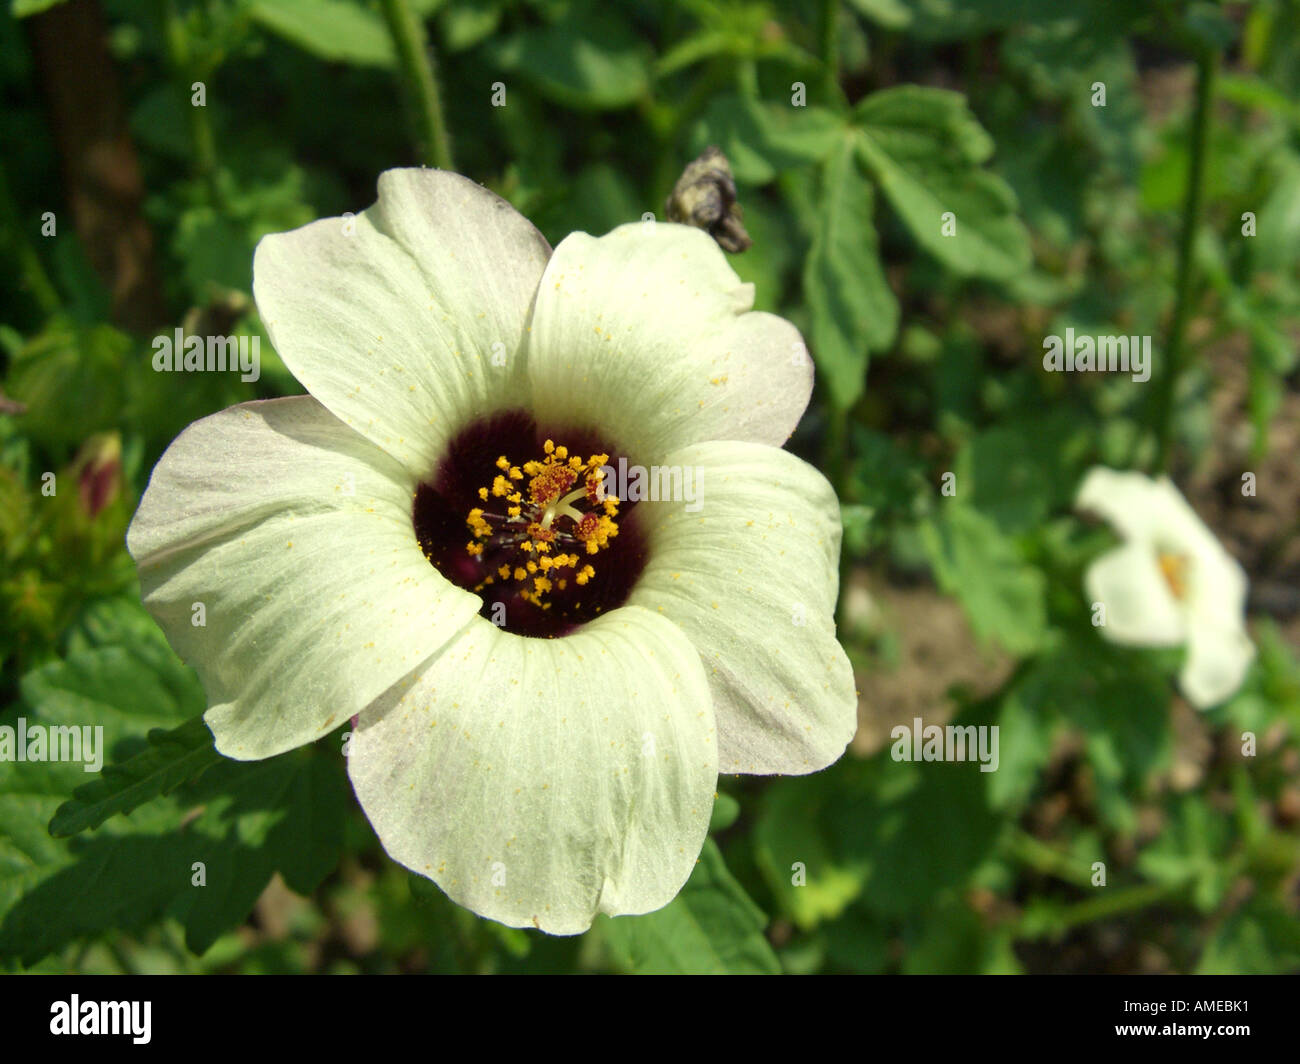 bladder ketmia, flower-of-an-hour, venice mallow (Hibiscus trionum), flower Stock Photo